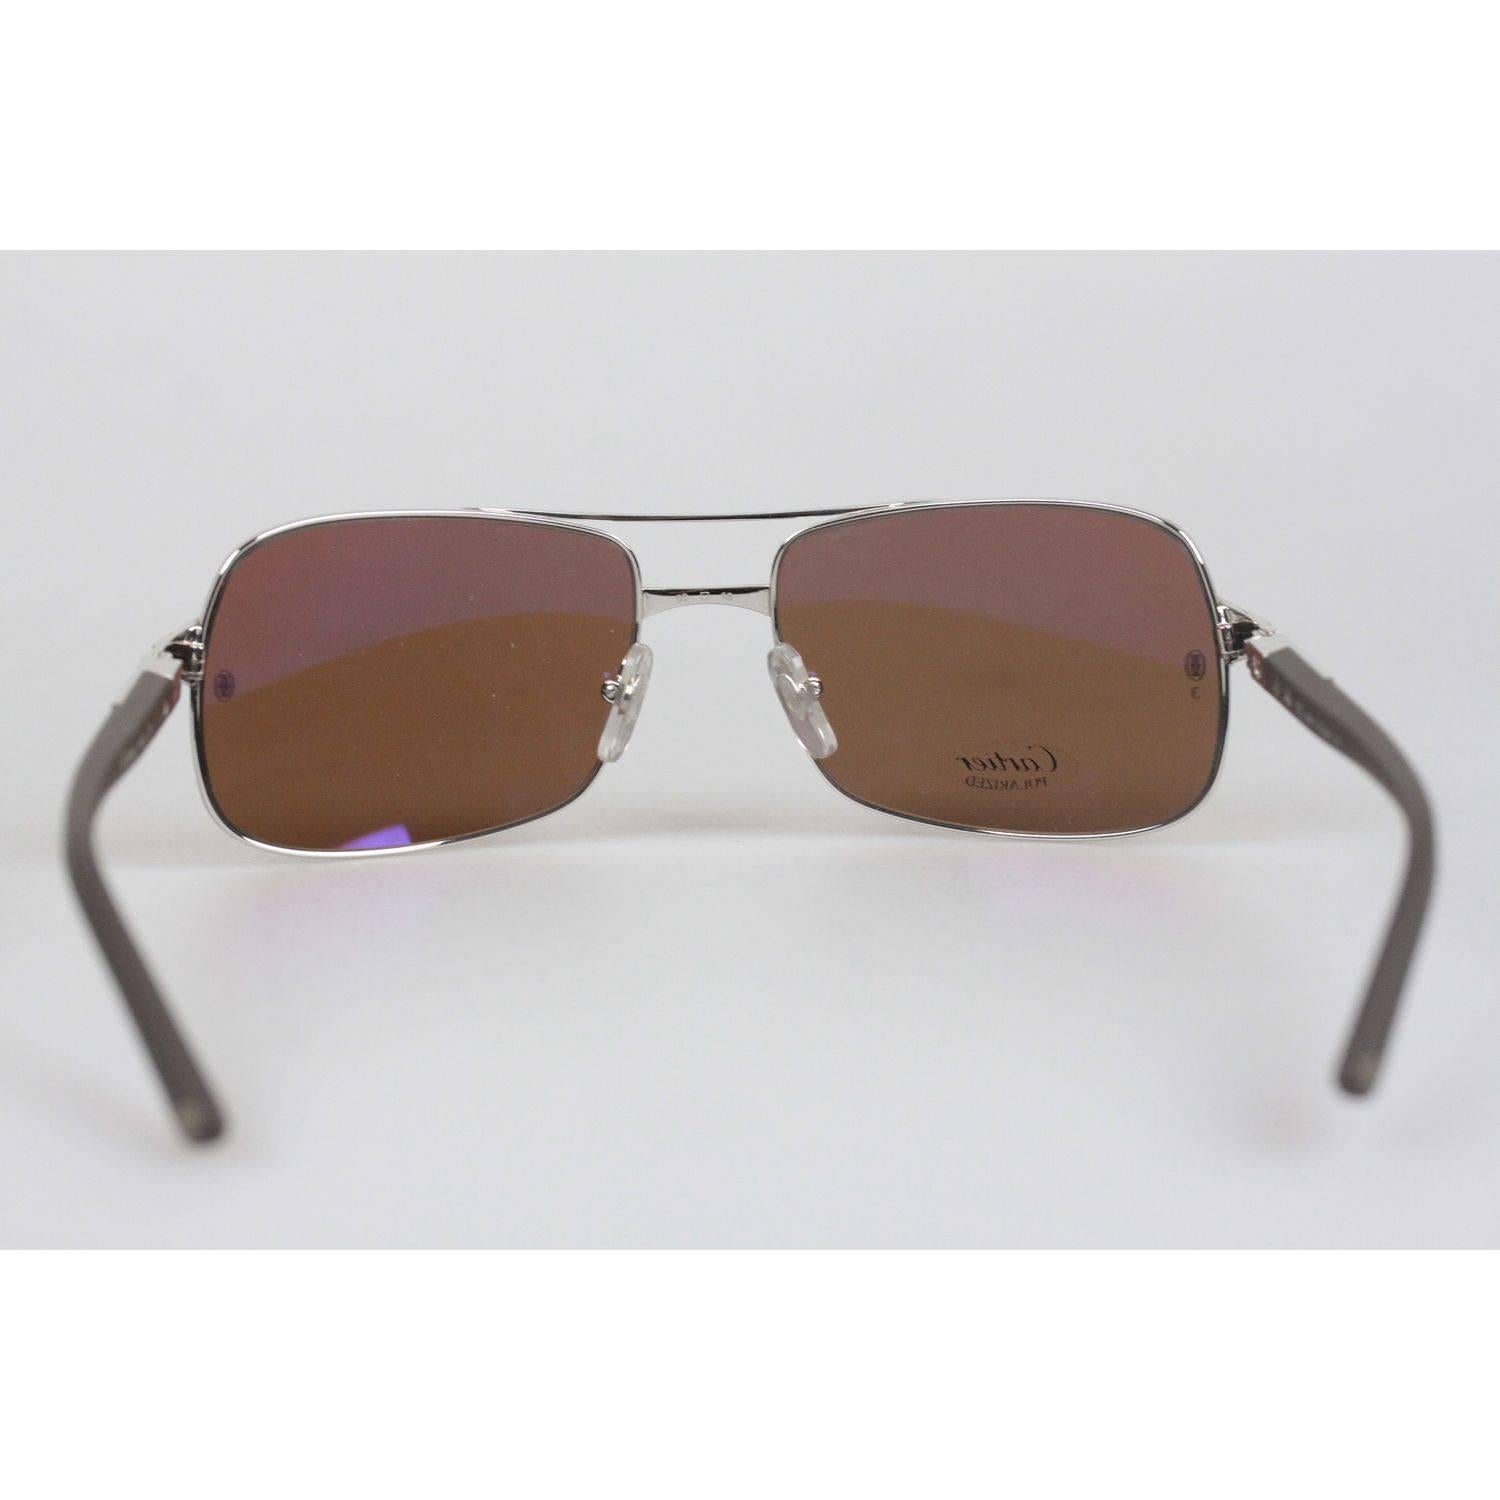 cartier sunglasses neil t8200716